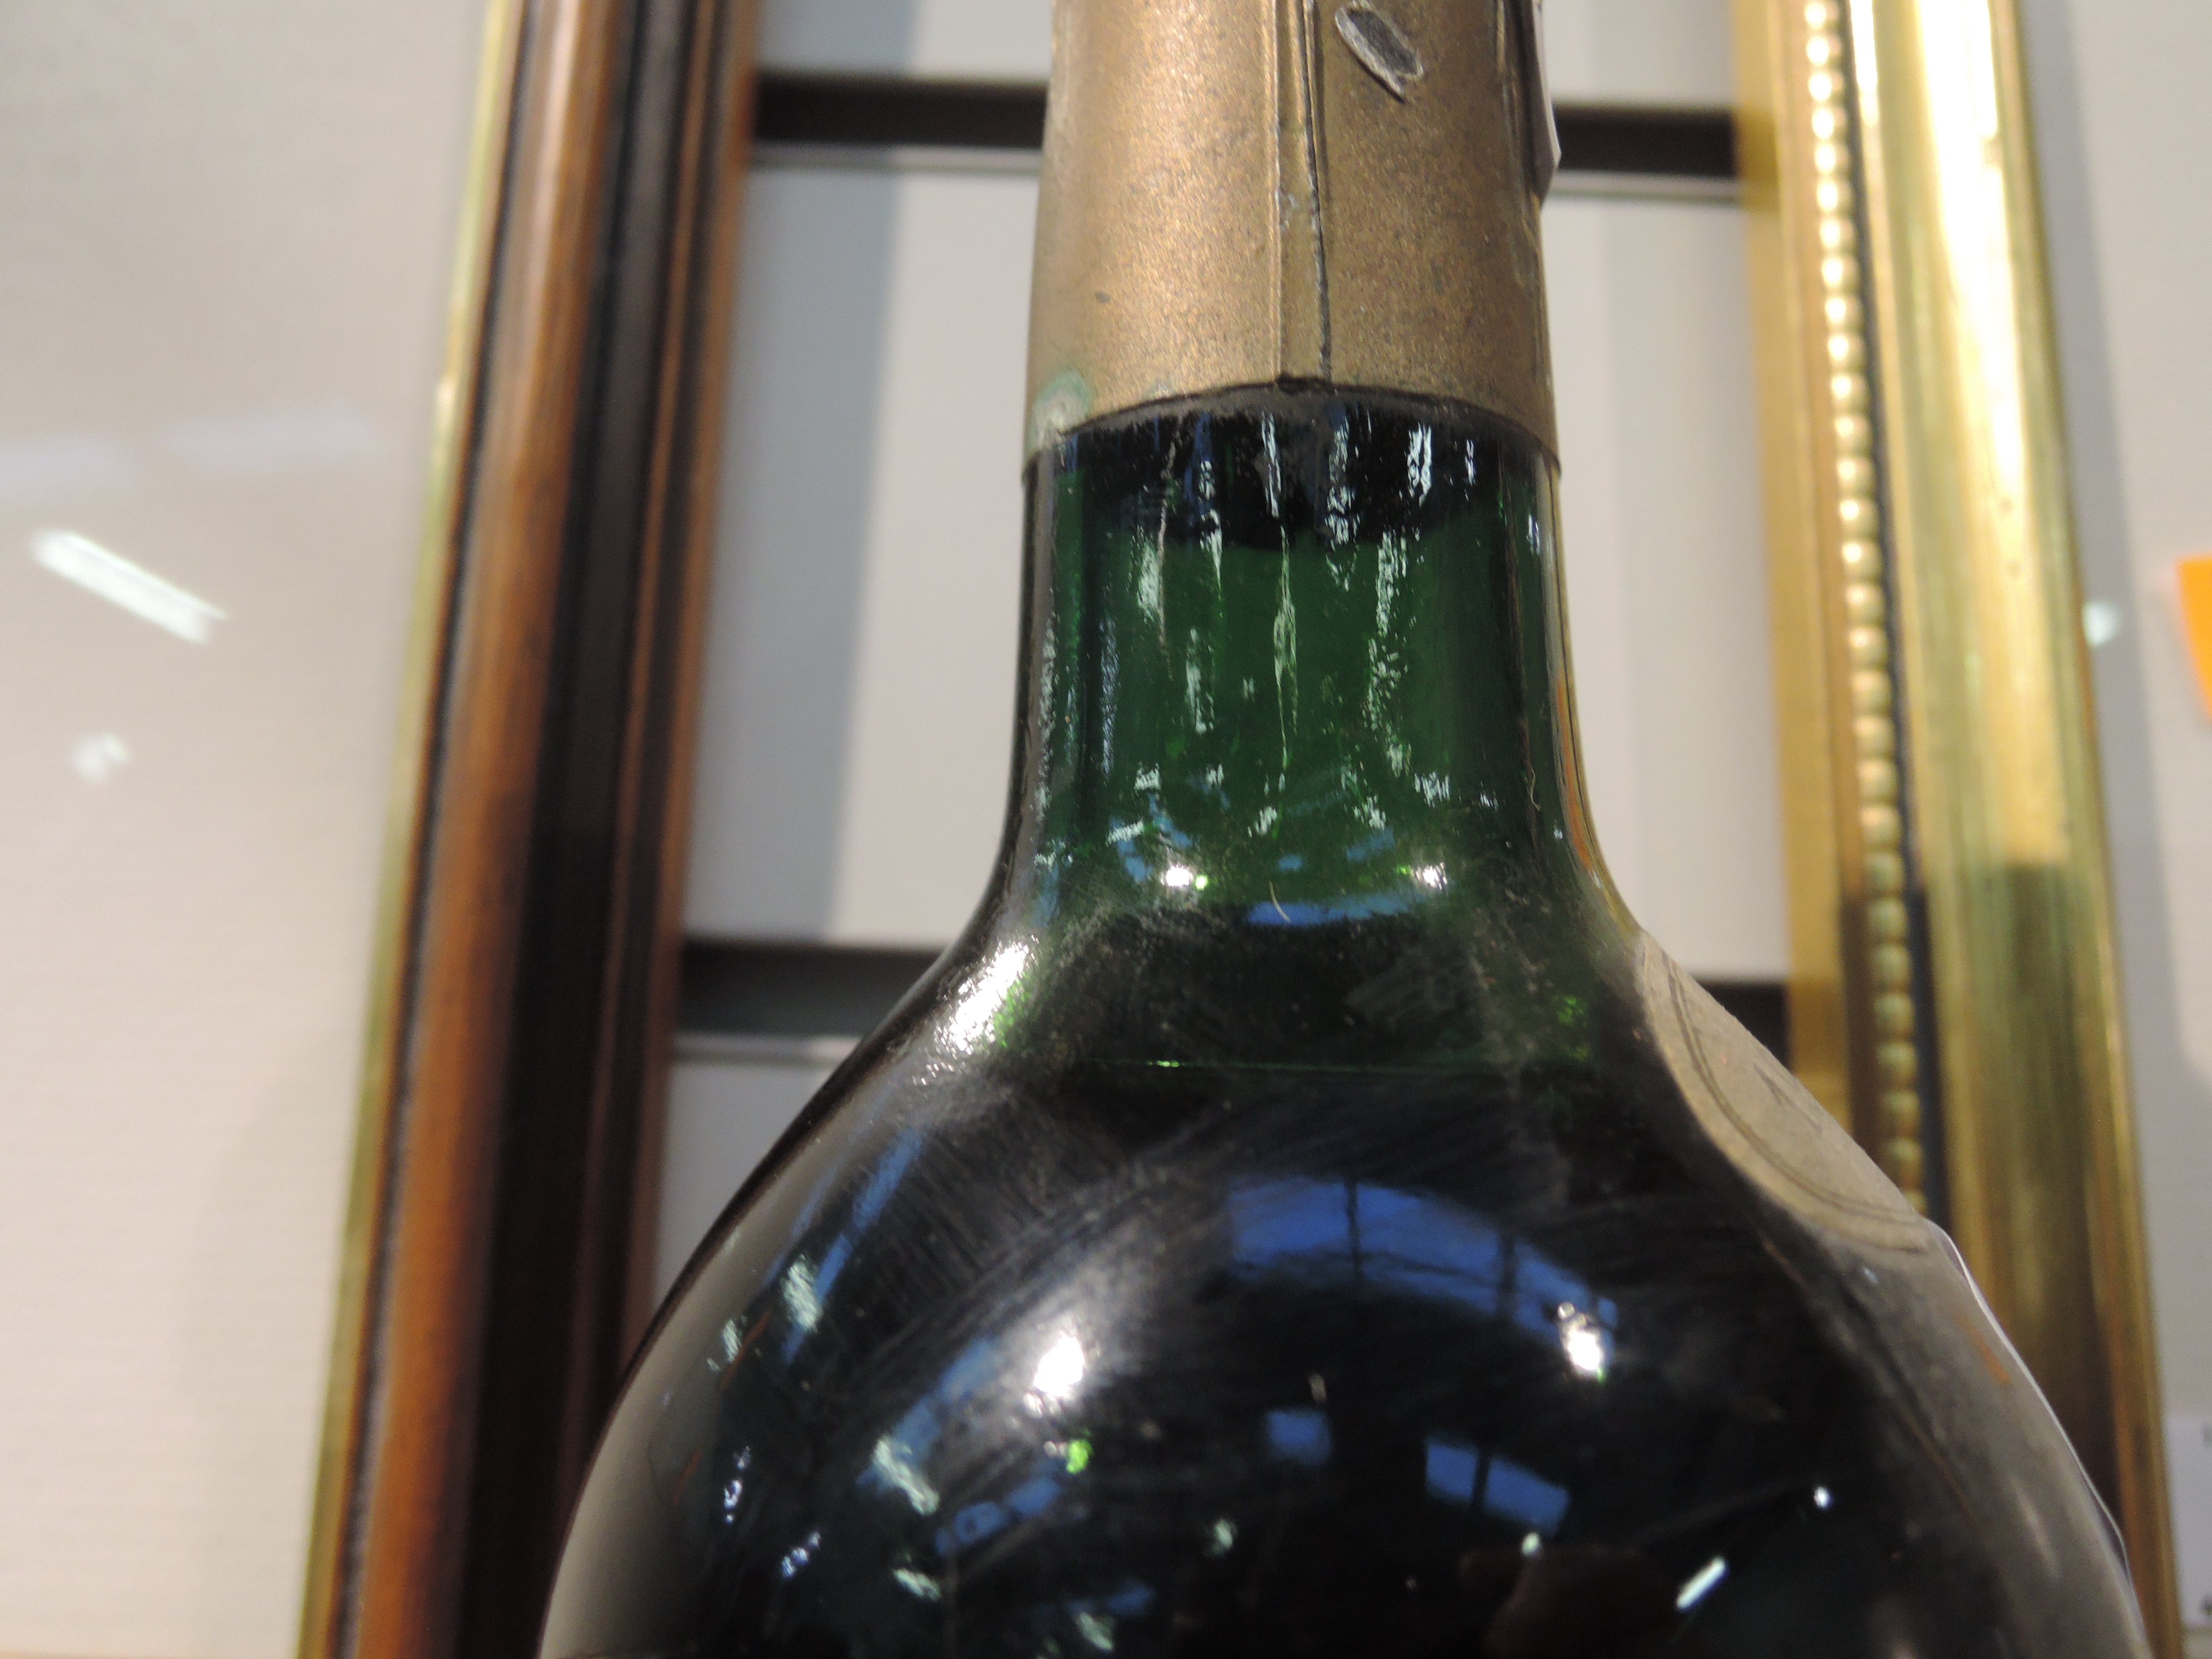 A 1955 bottle of Grand Vin Chateau Calon Segur, Saint Estephe - Image 2 of 3